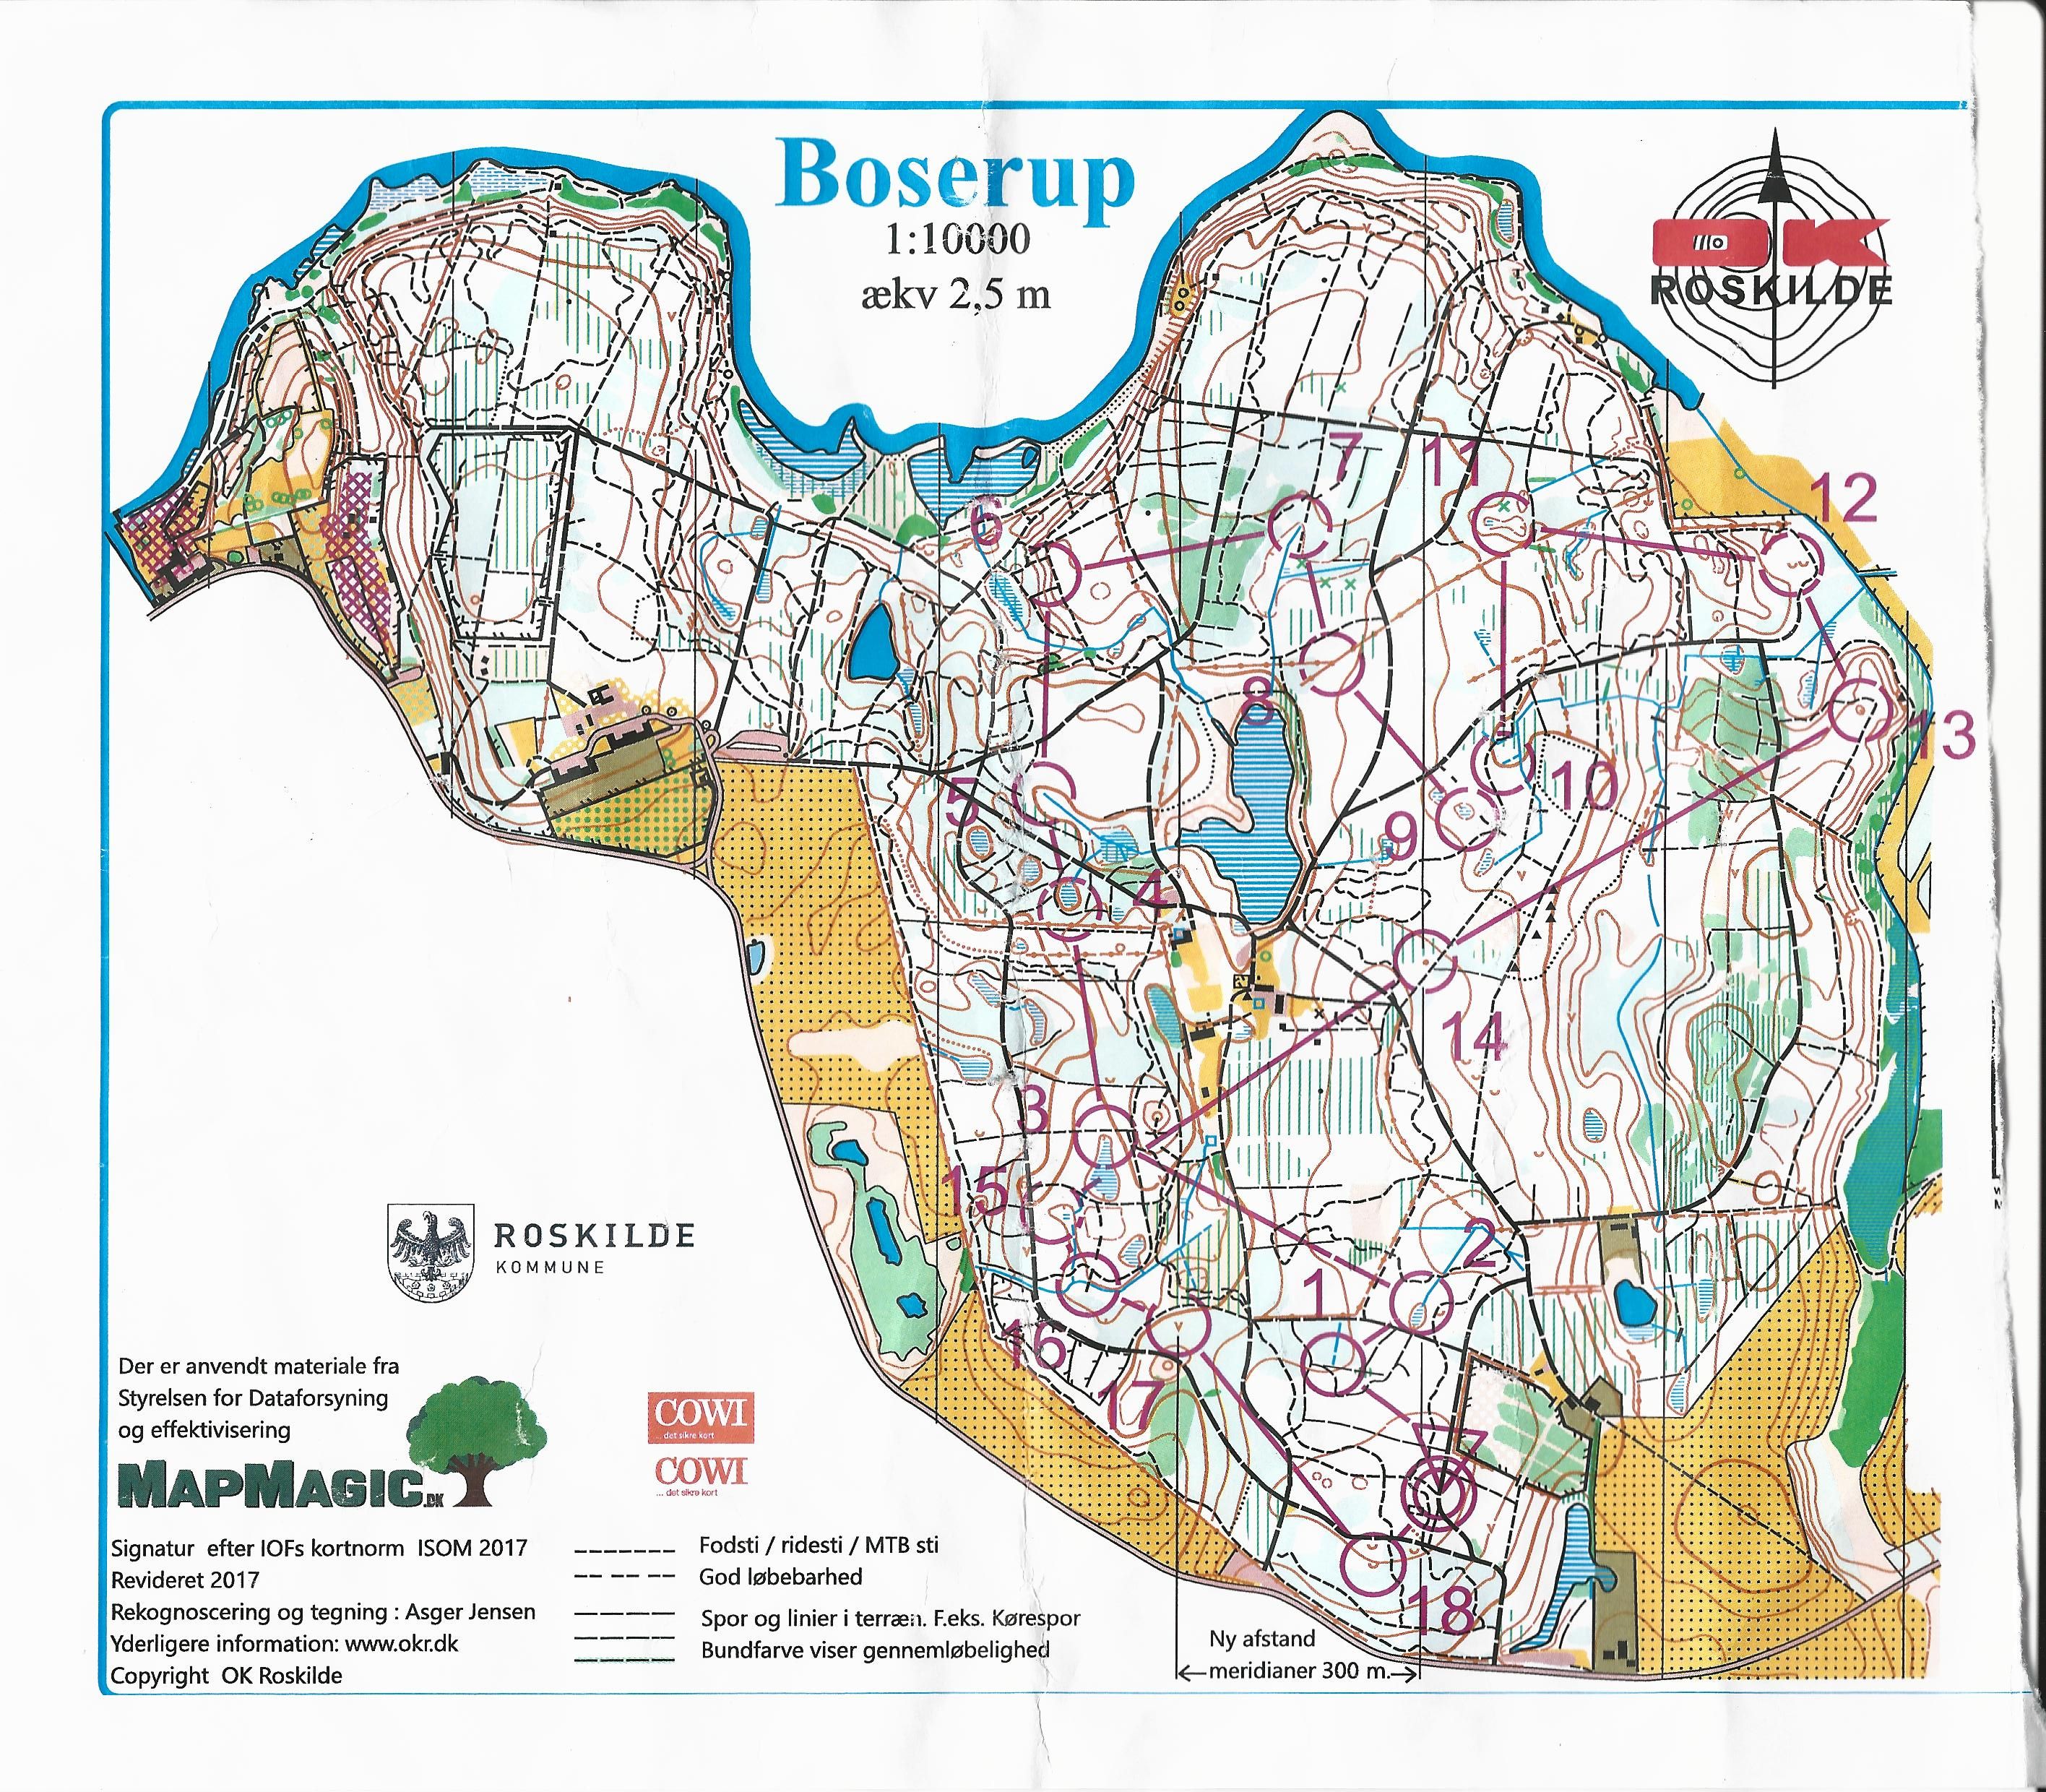 Mellemdistance-træning, Boserup (2021-05-24)